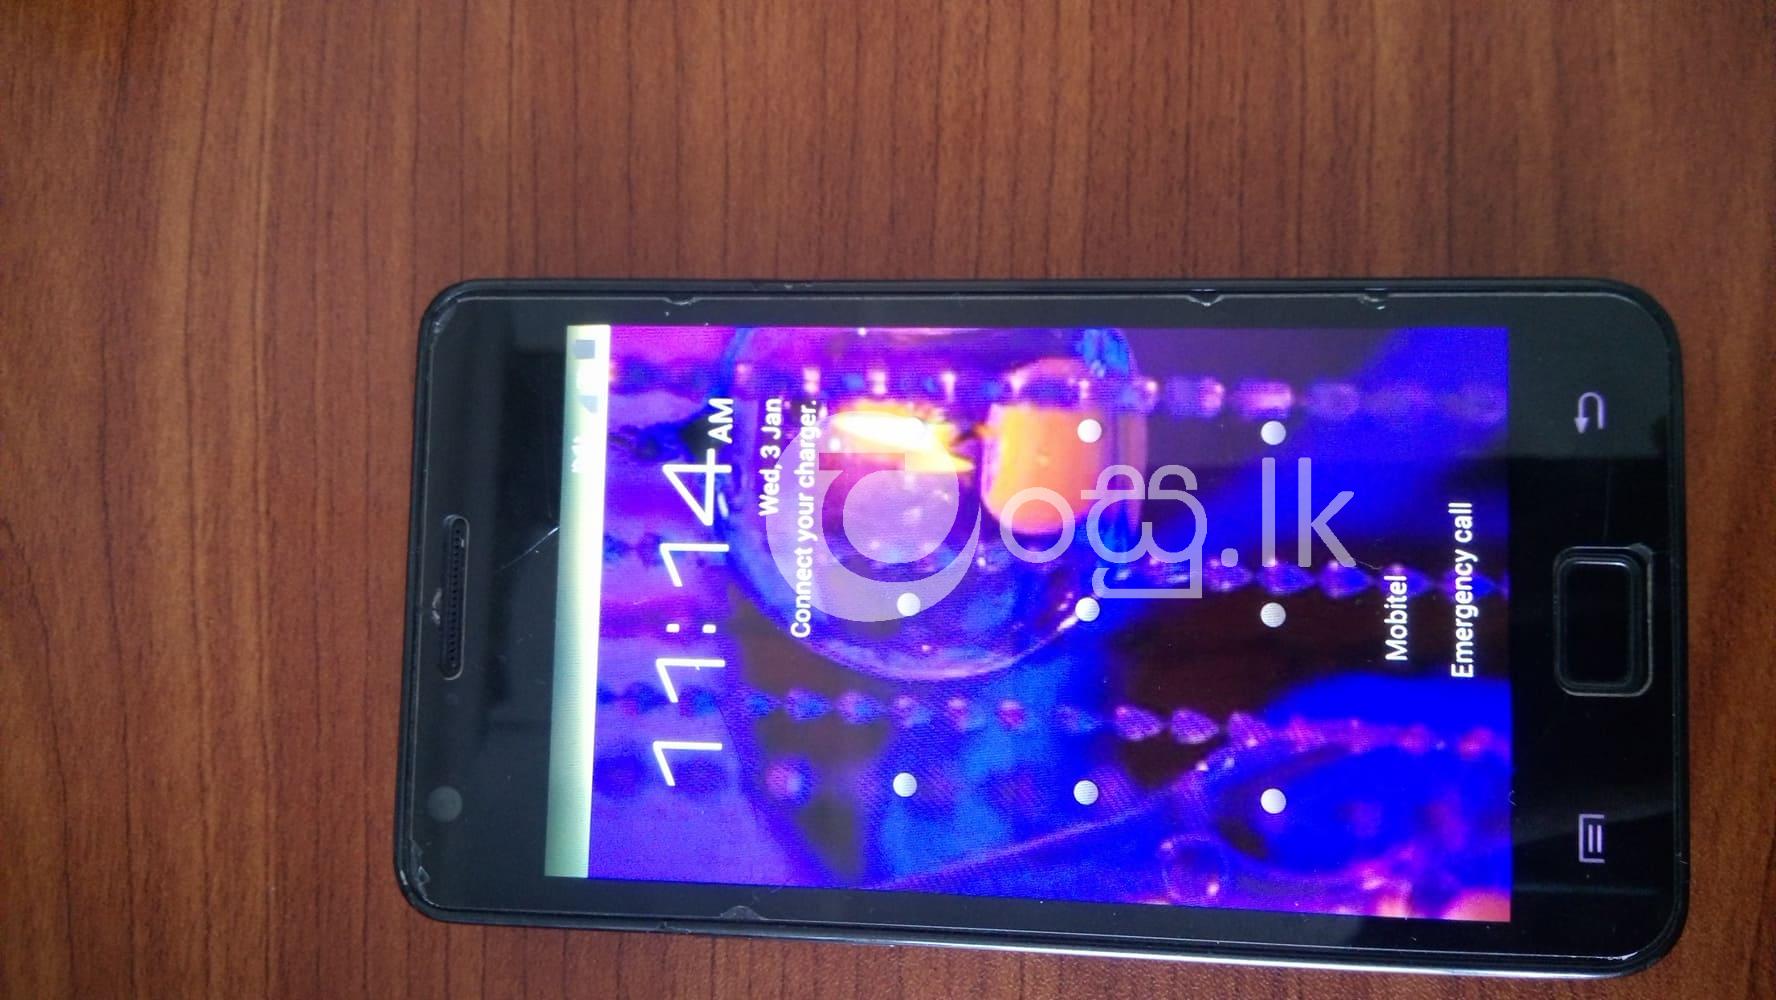 S2 Samsung phone for Sale in Ambalangoda